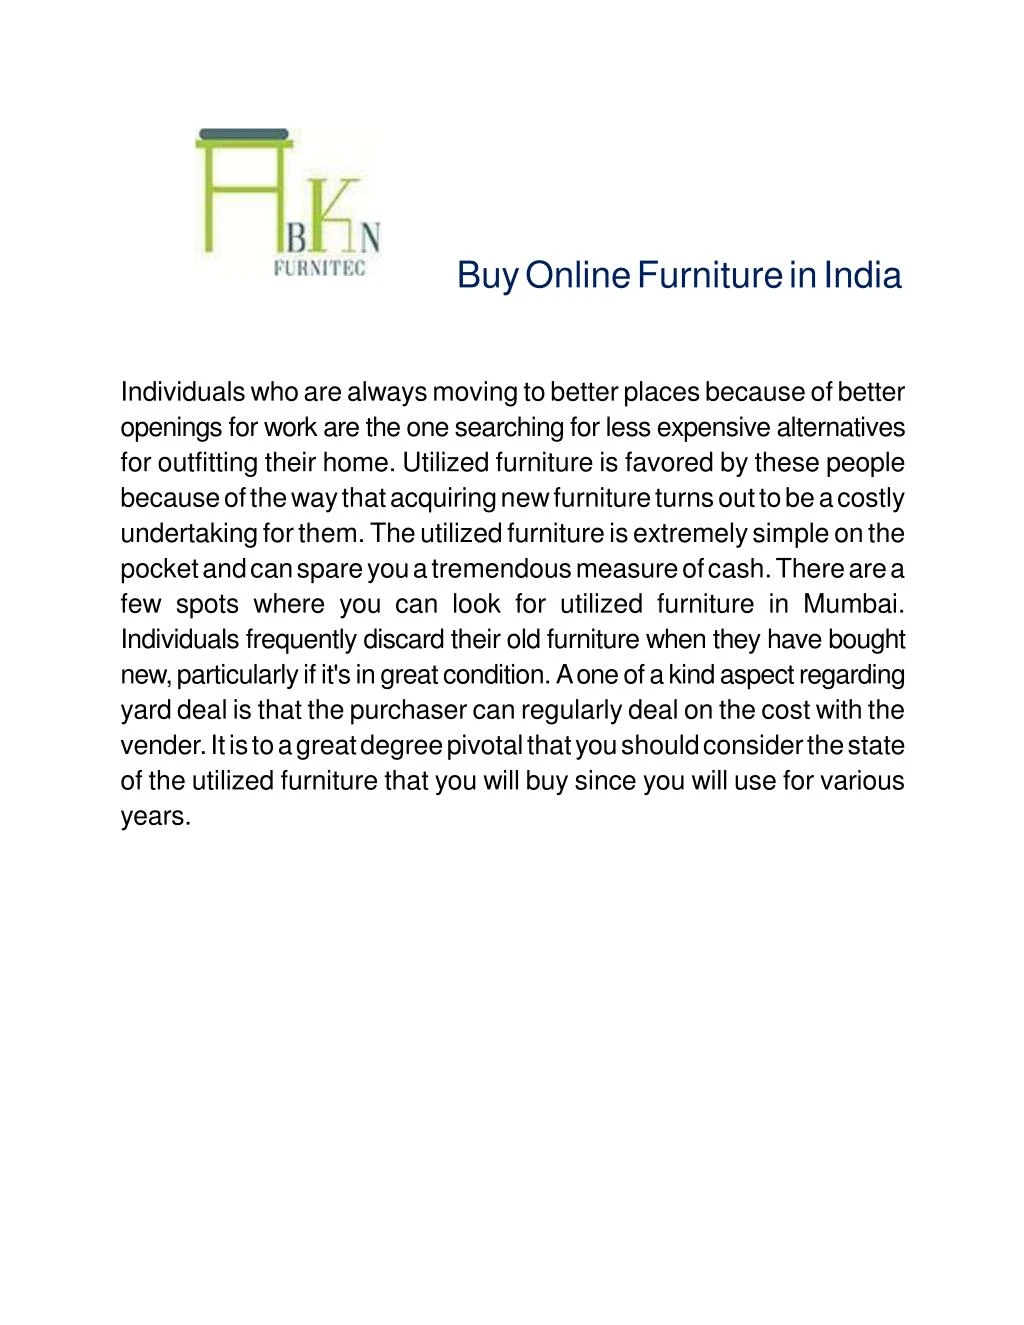 buy online furniture in india individuals